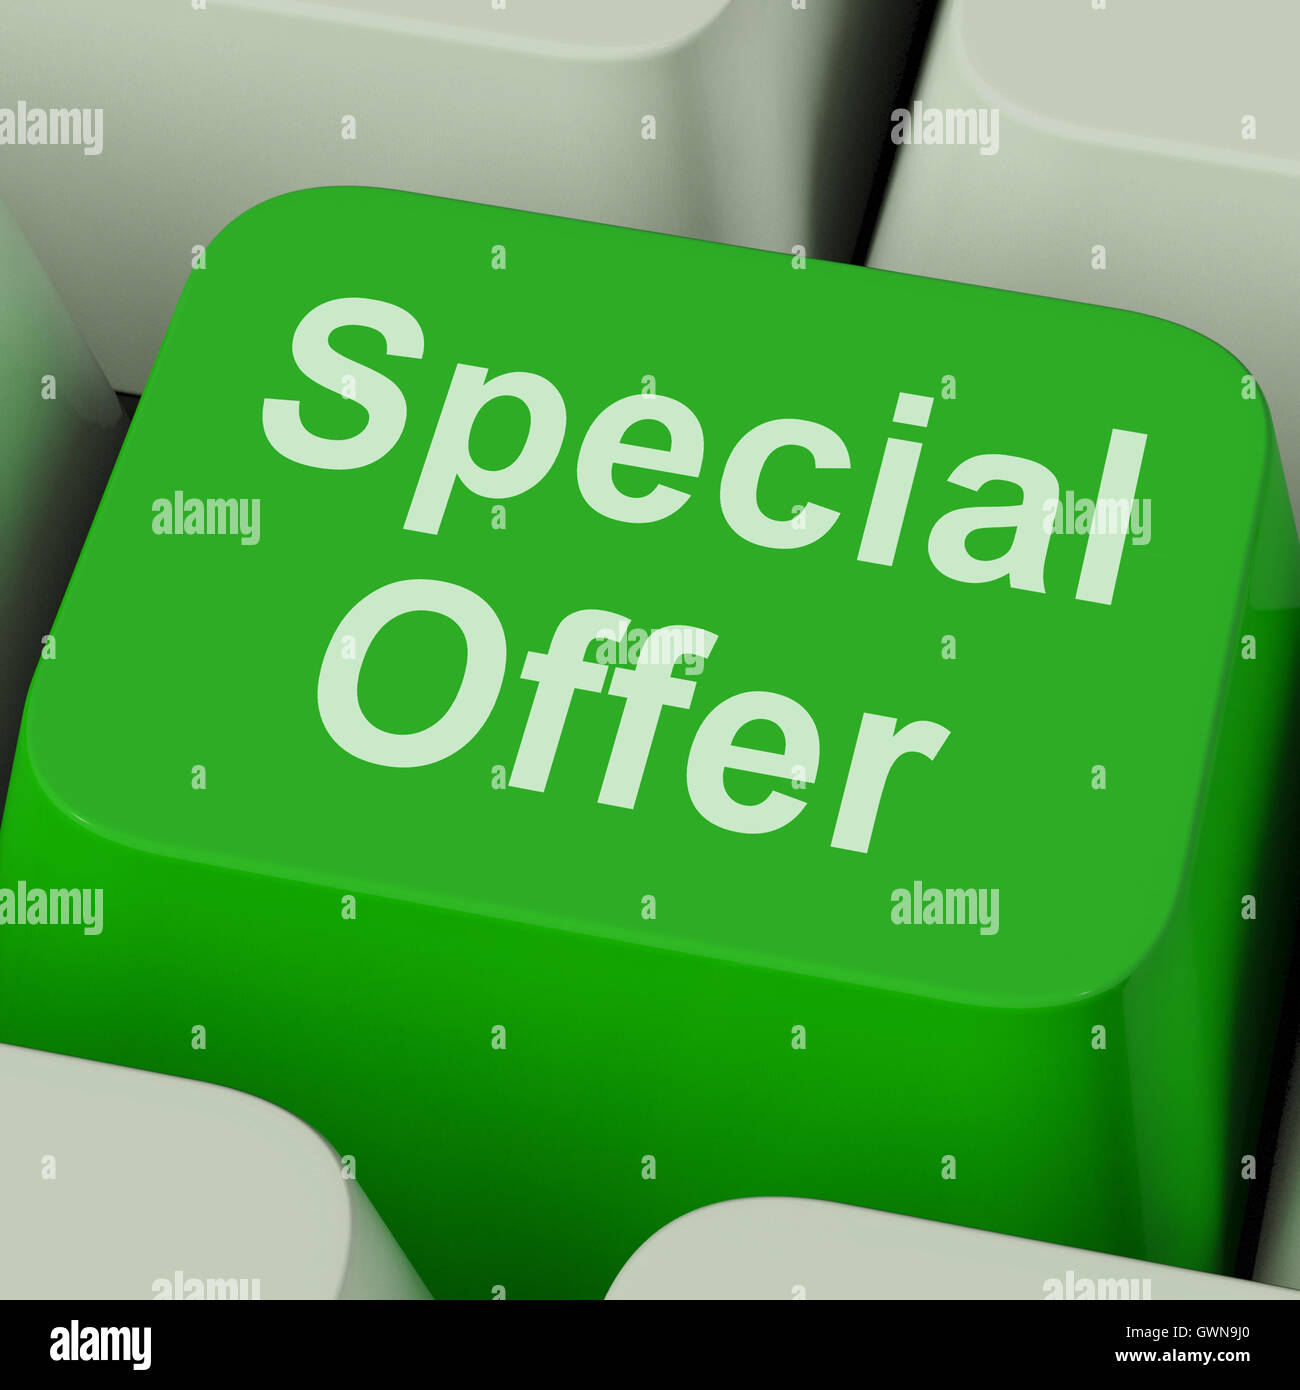 Special online discounts